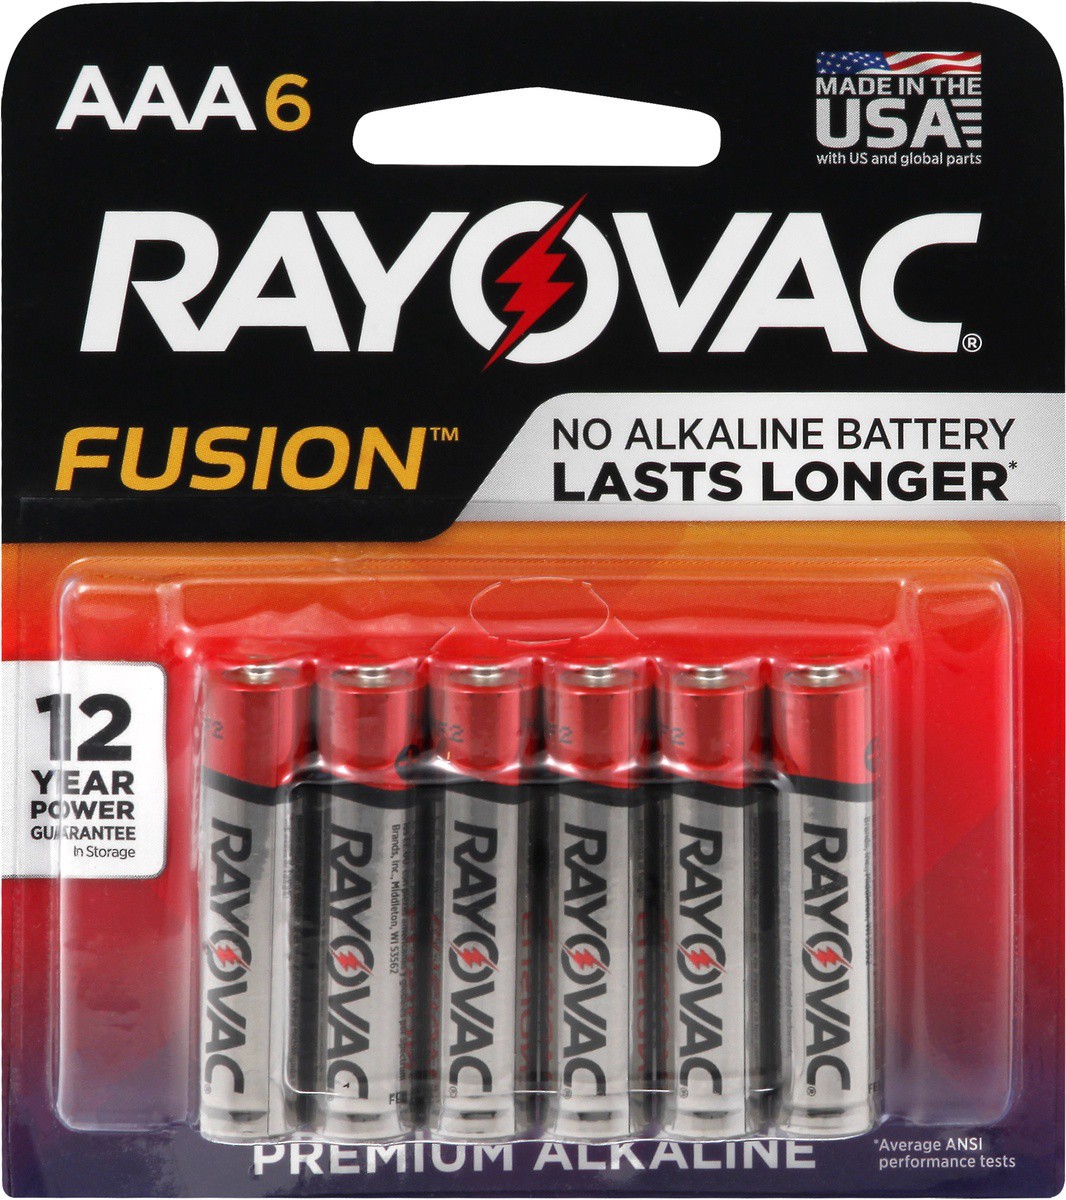 slide 6 of 9, Rayovac Fusion AAA Batteries (6 Pack), Triple A Alkaline Batteries, 6 ct